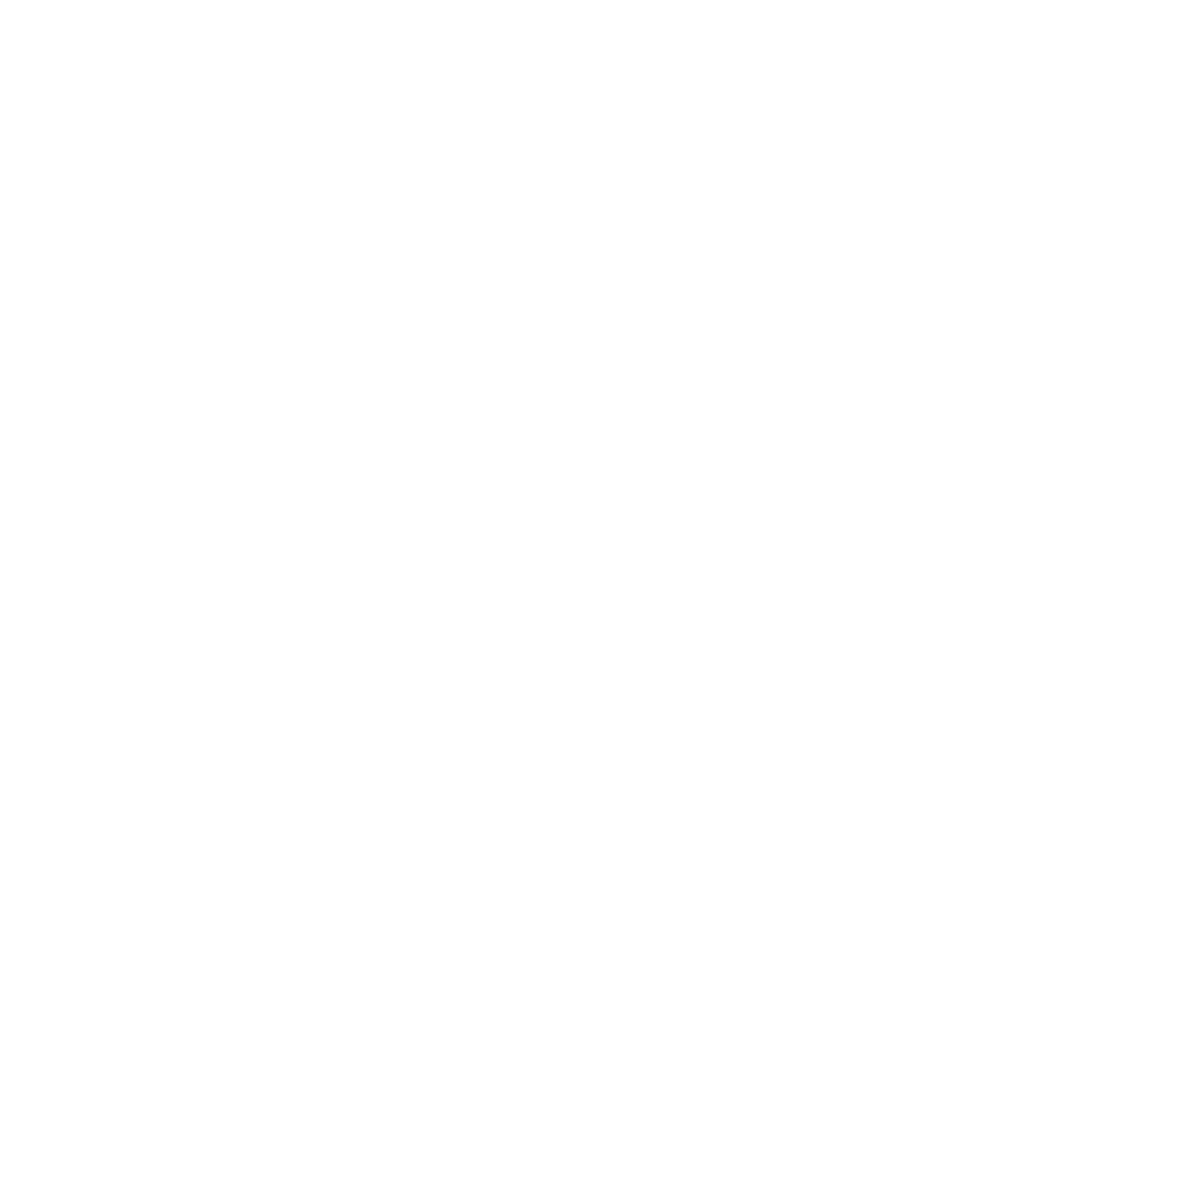 Downtown Fayette